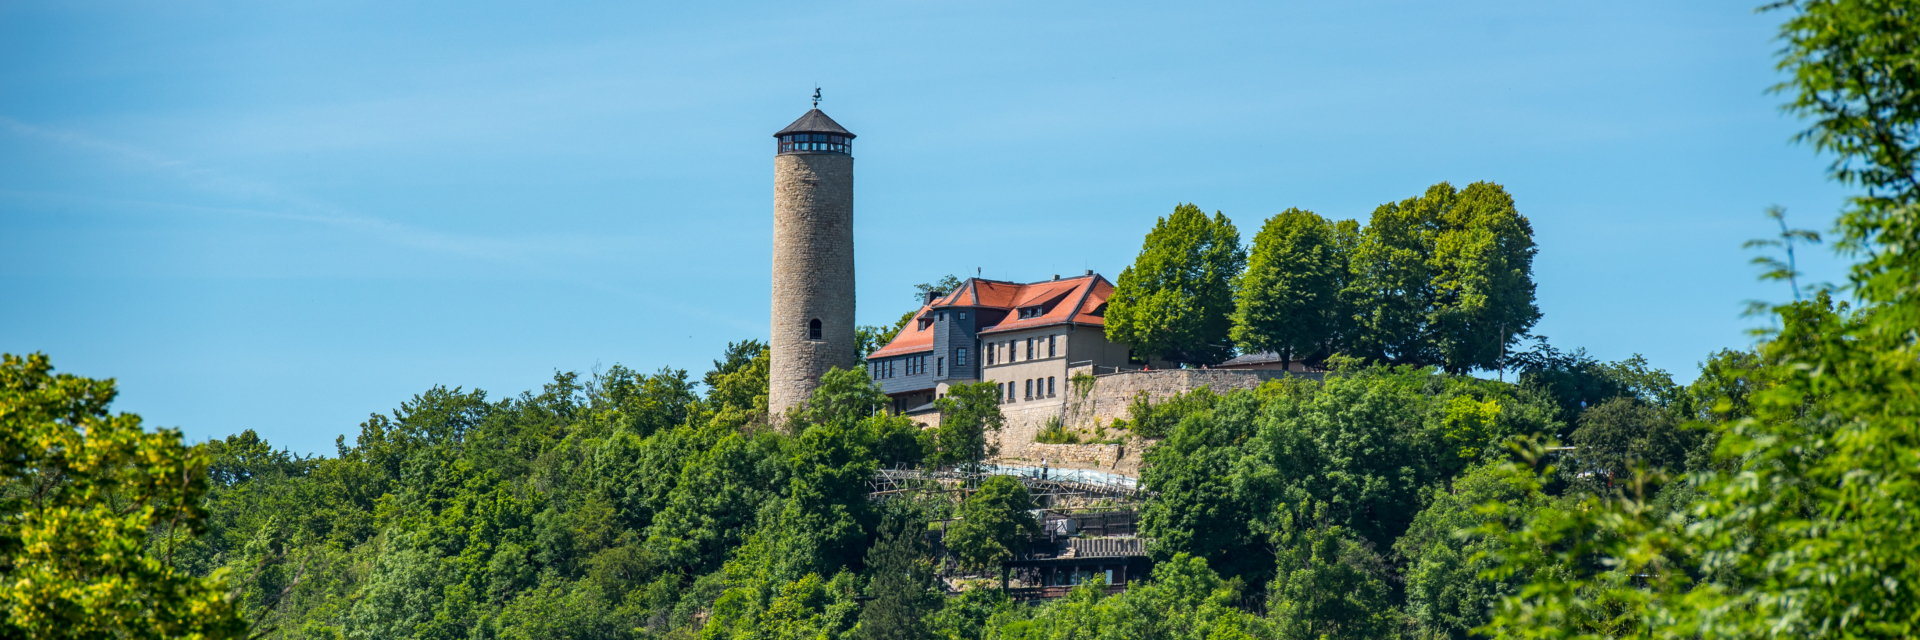 Blick zum Fuchsturm - Eins der sieben Wunder Jenas © JenaKultur, Foto: Christian Häcker